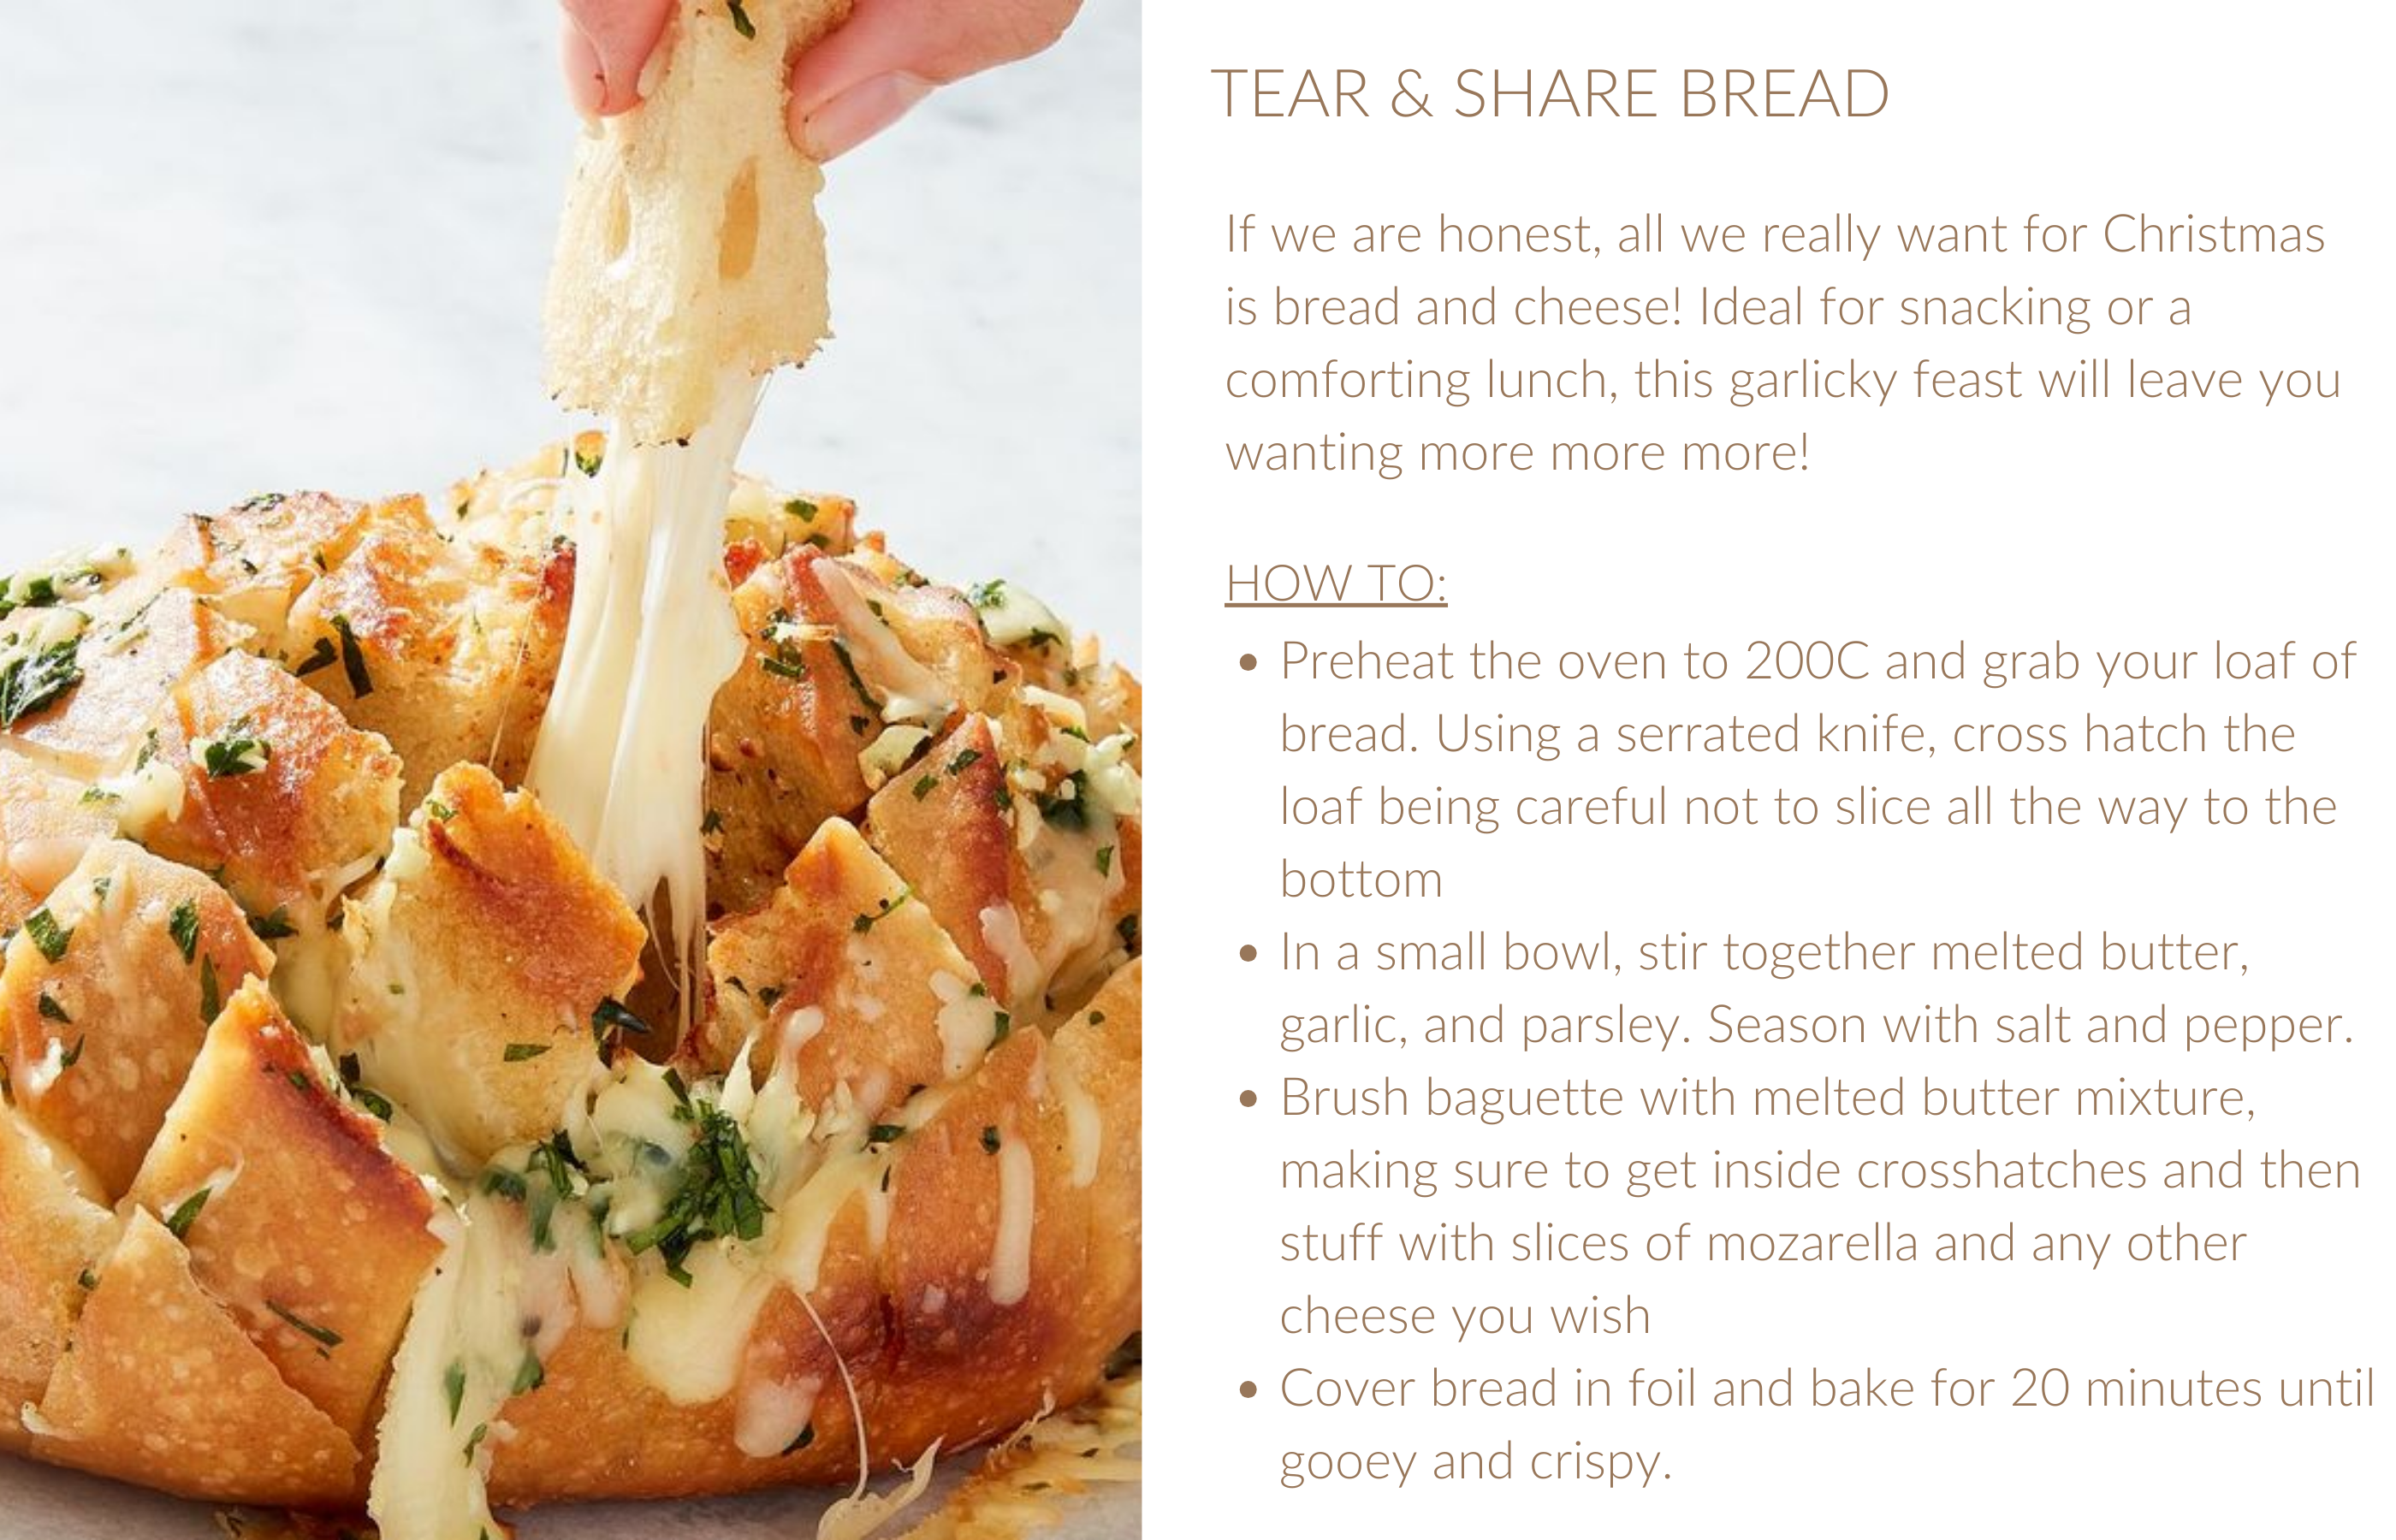 Tear & Share Bread